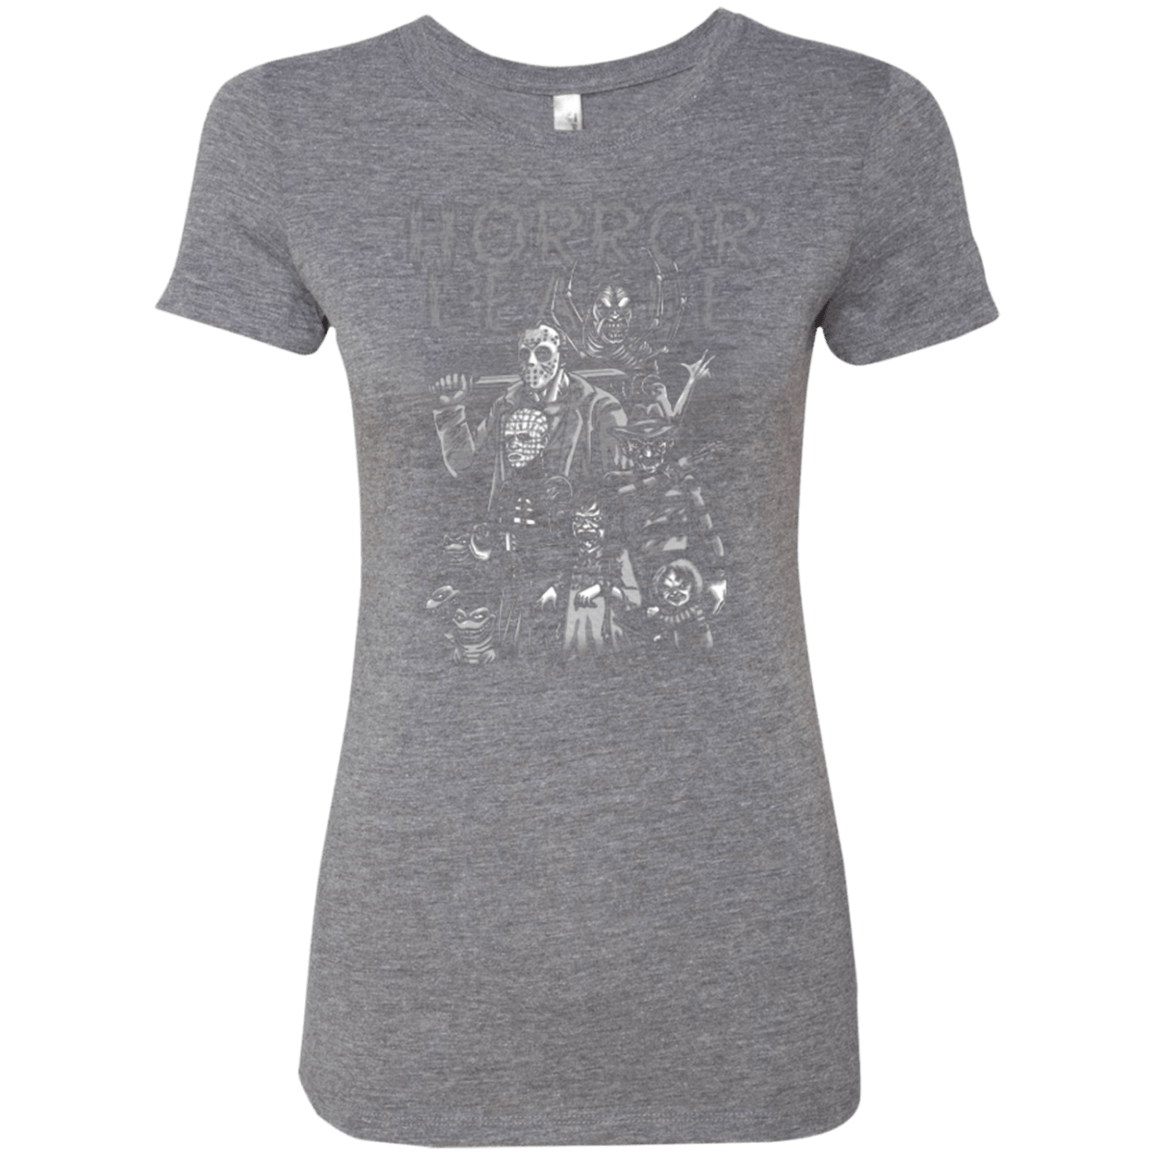 T-Shirts Premium Heather / Small Horror League Women's Triblend T-Shirt